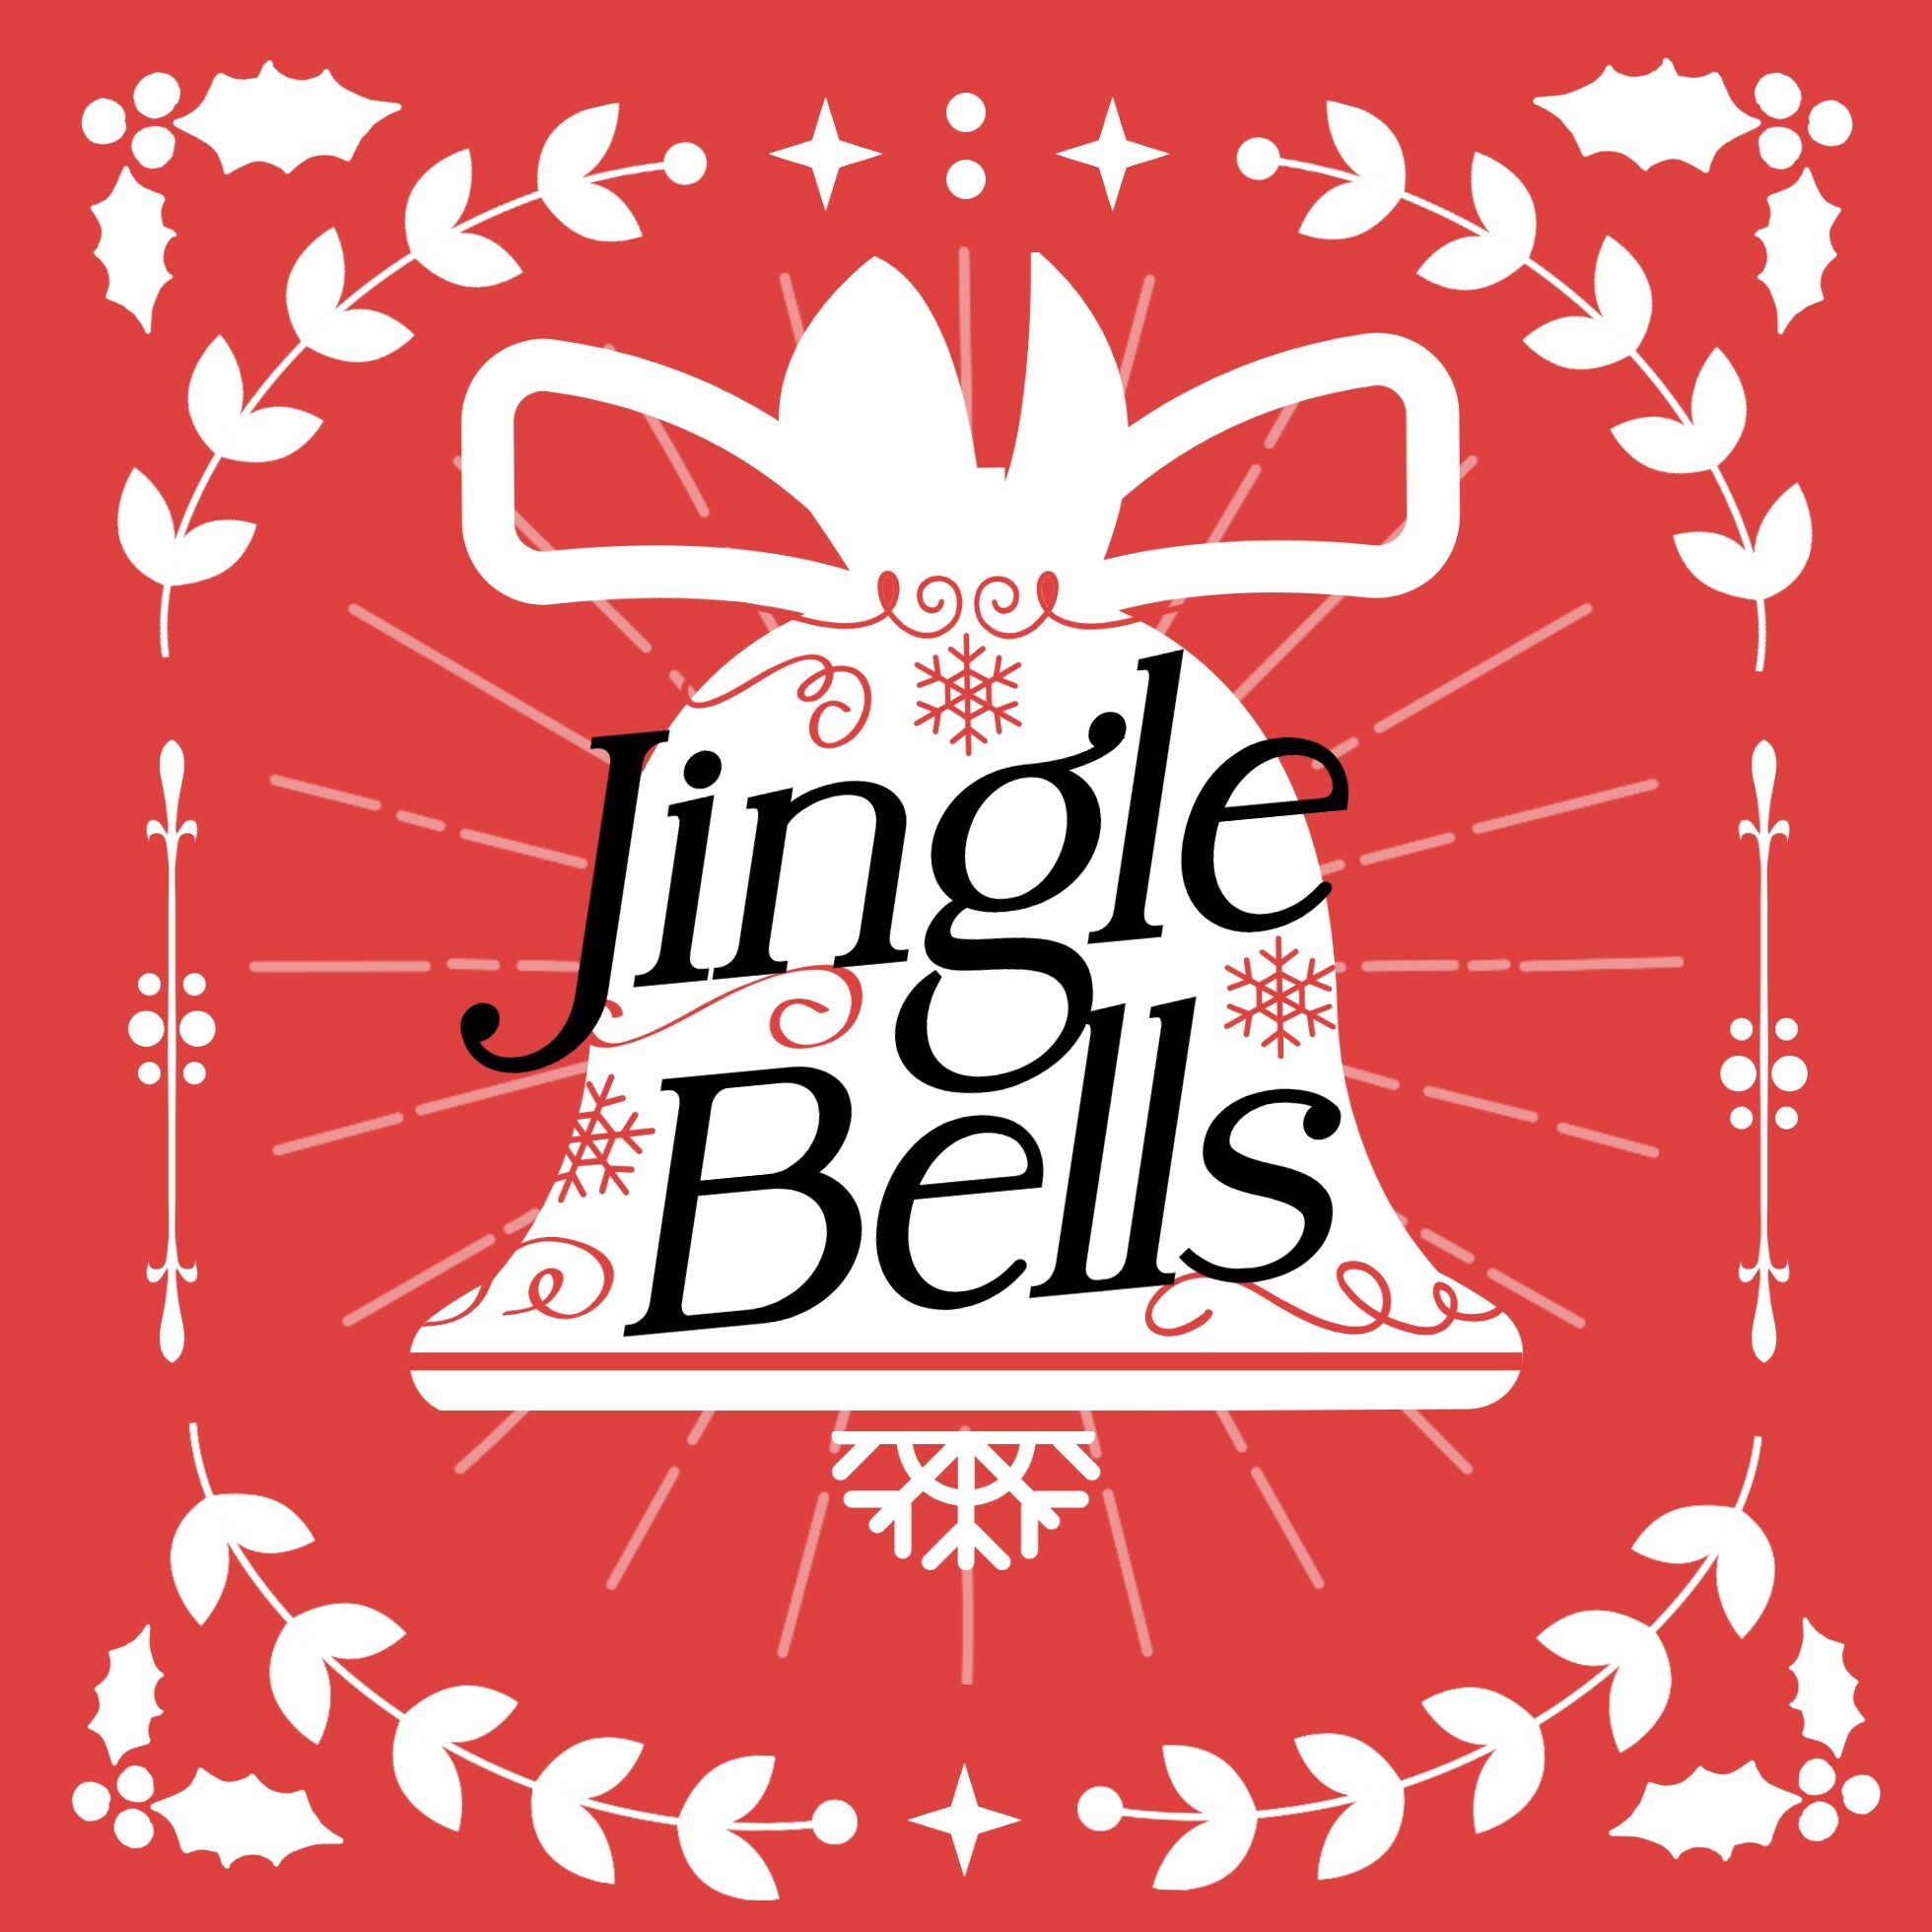 Christmas (Season's Greetings) - Instagram post - Jingle Bells